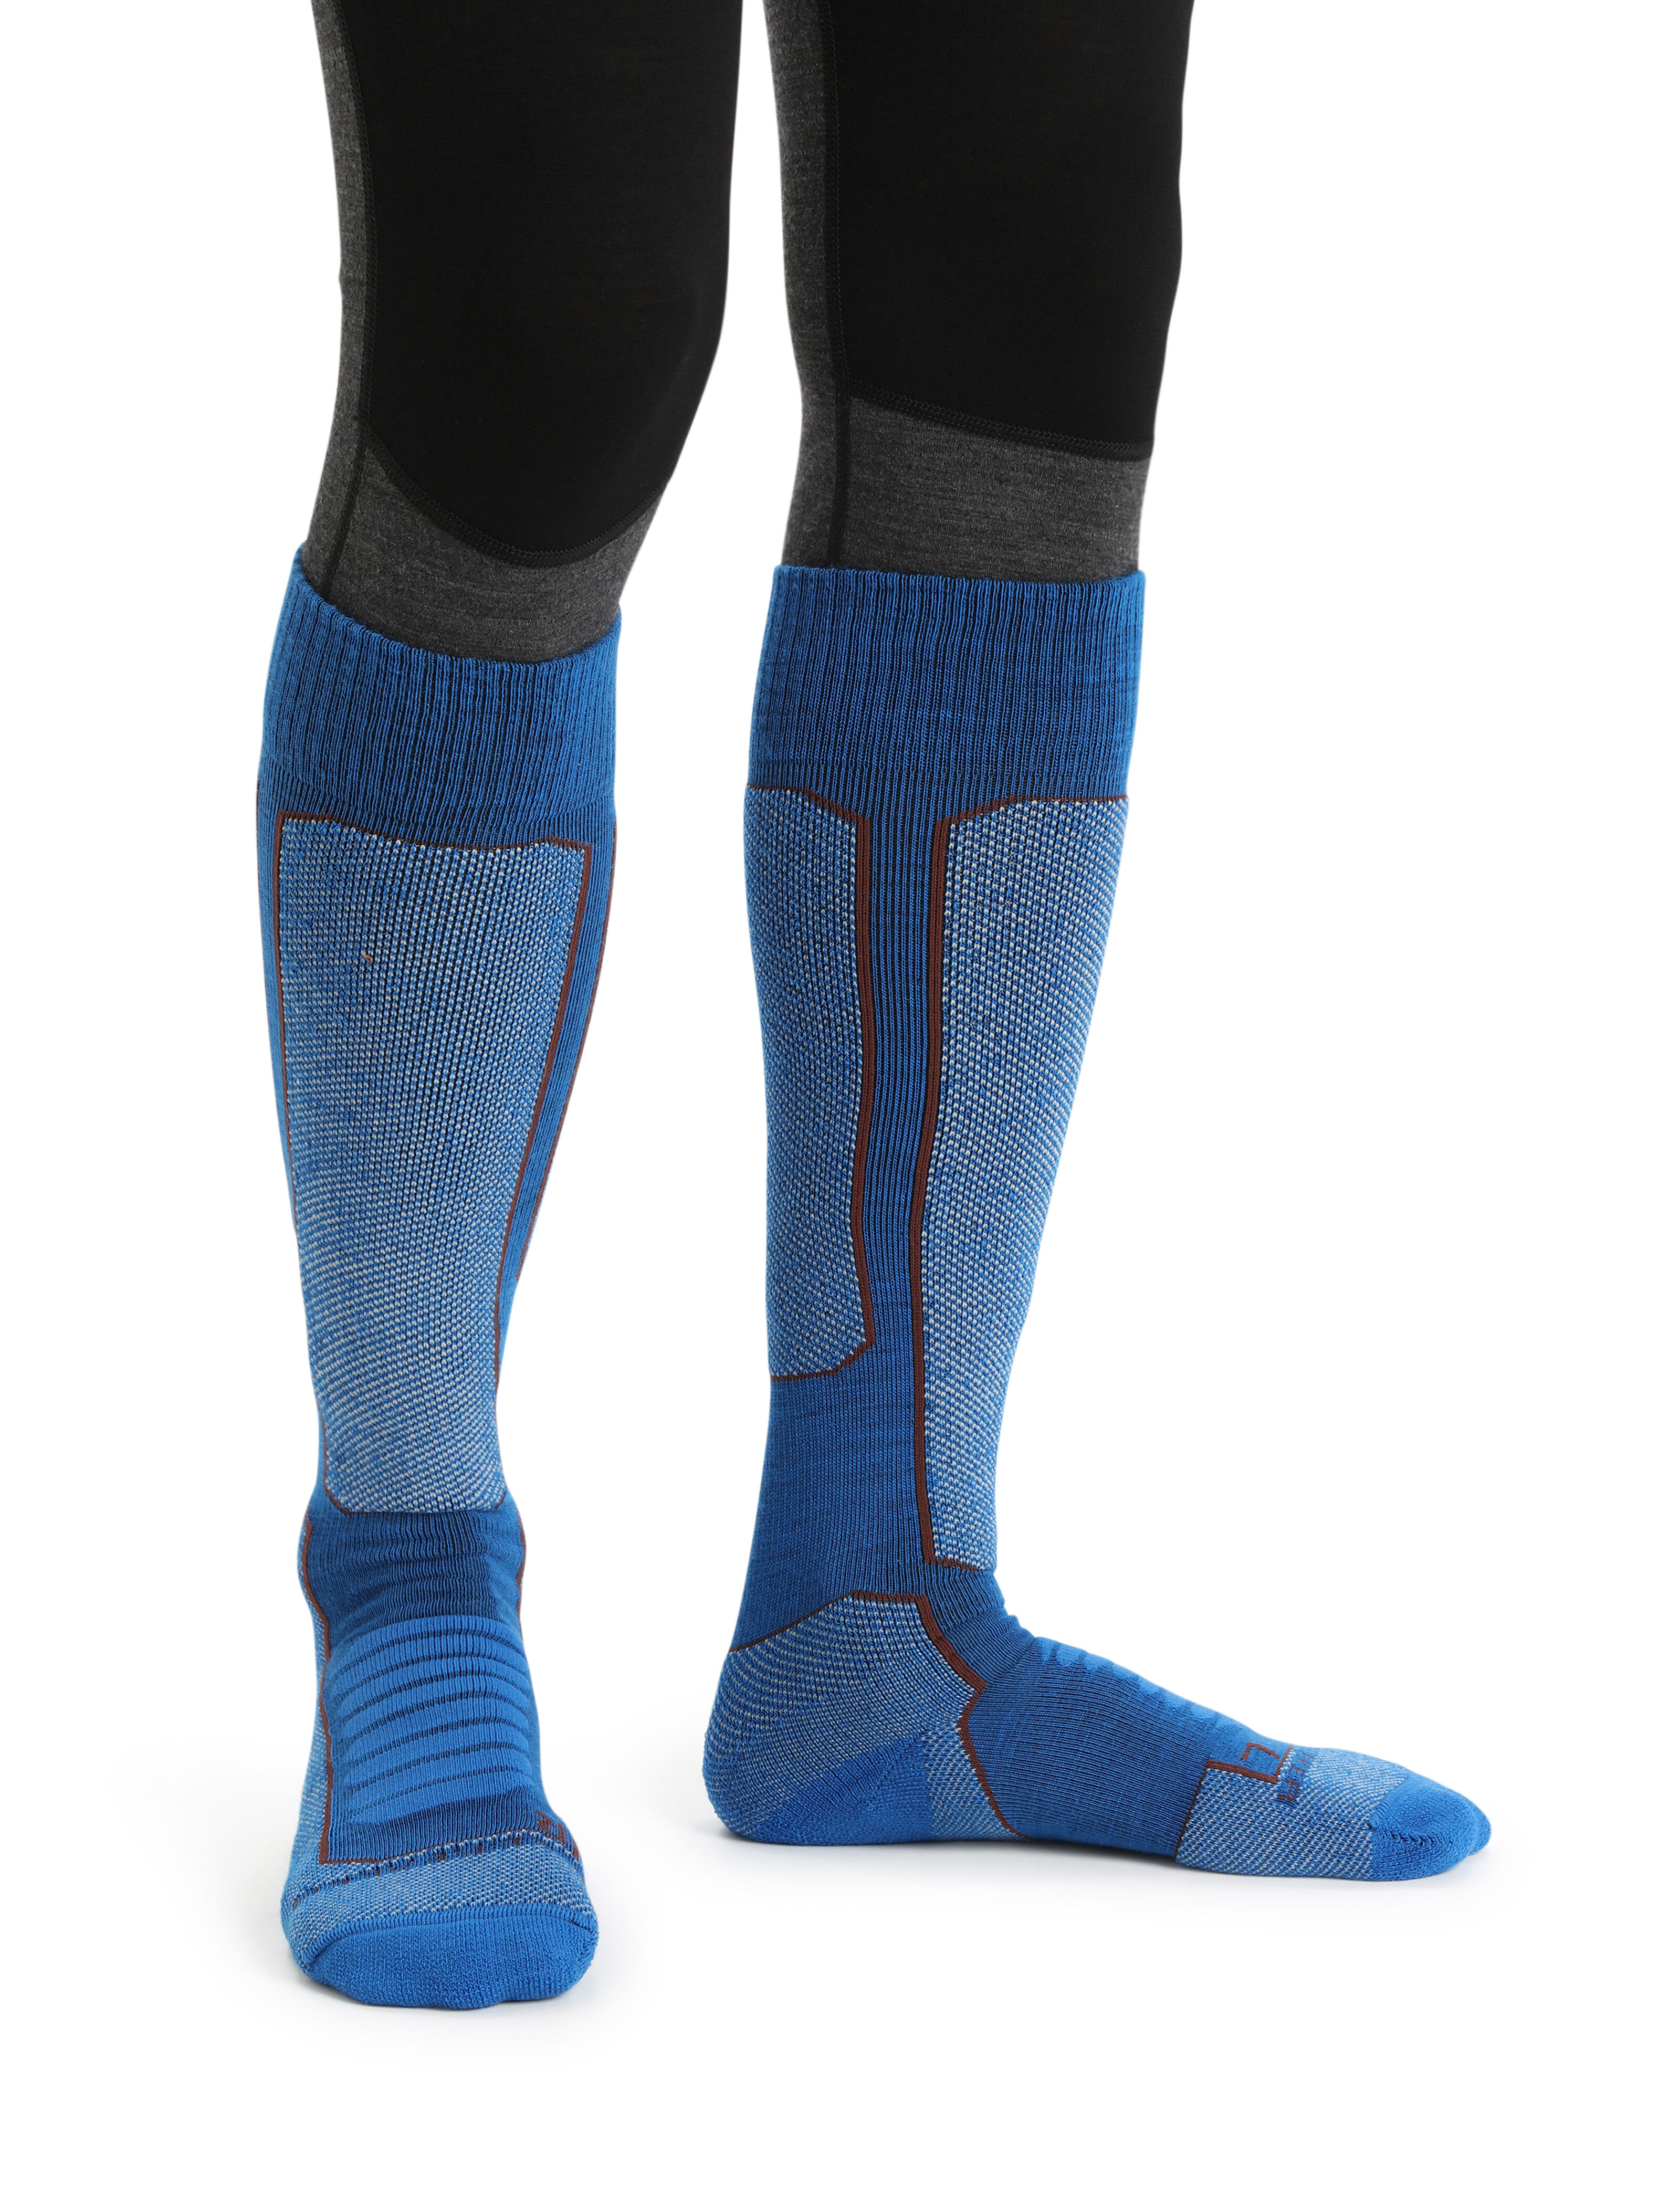 IcebreakerIcebreaker Over The Calf Medium Cushion Wool Ski Socks For Men Calzini Uomo Marca 